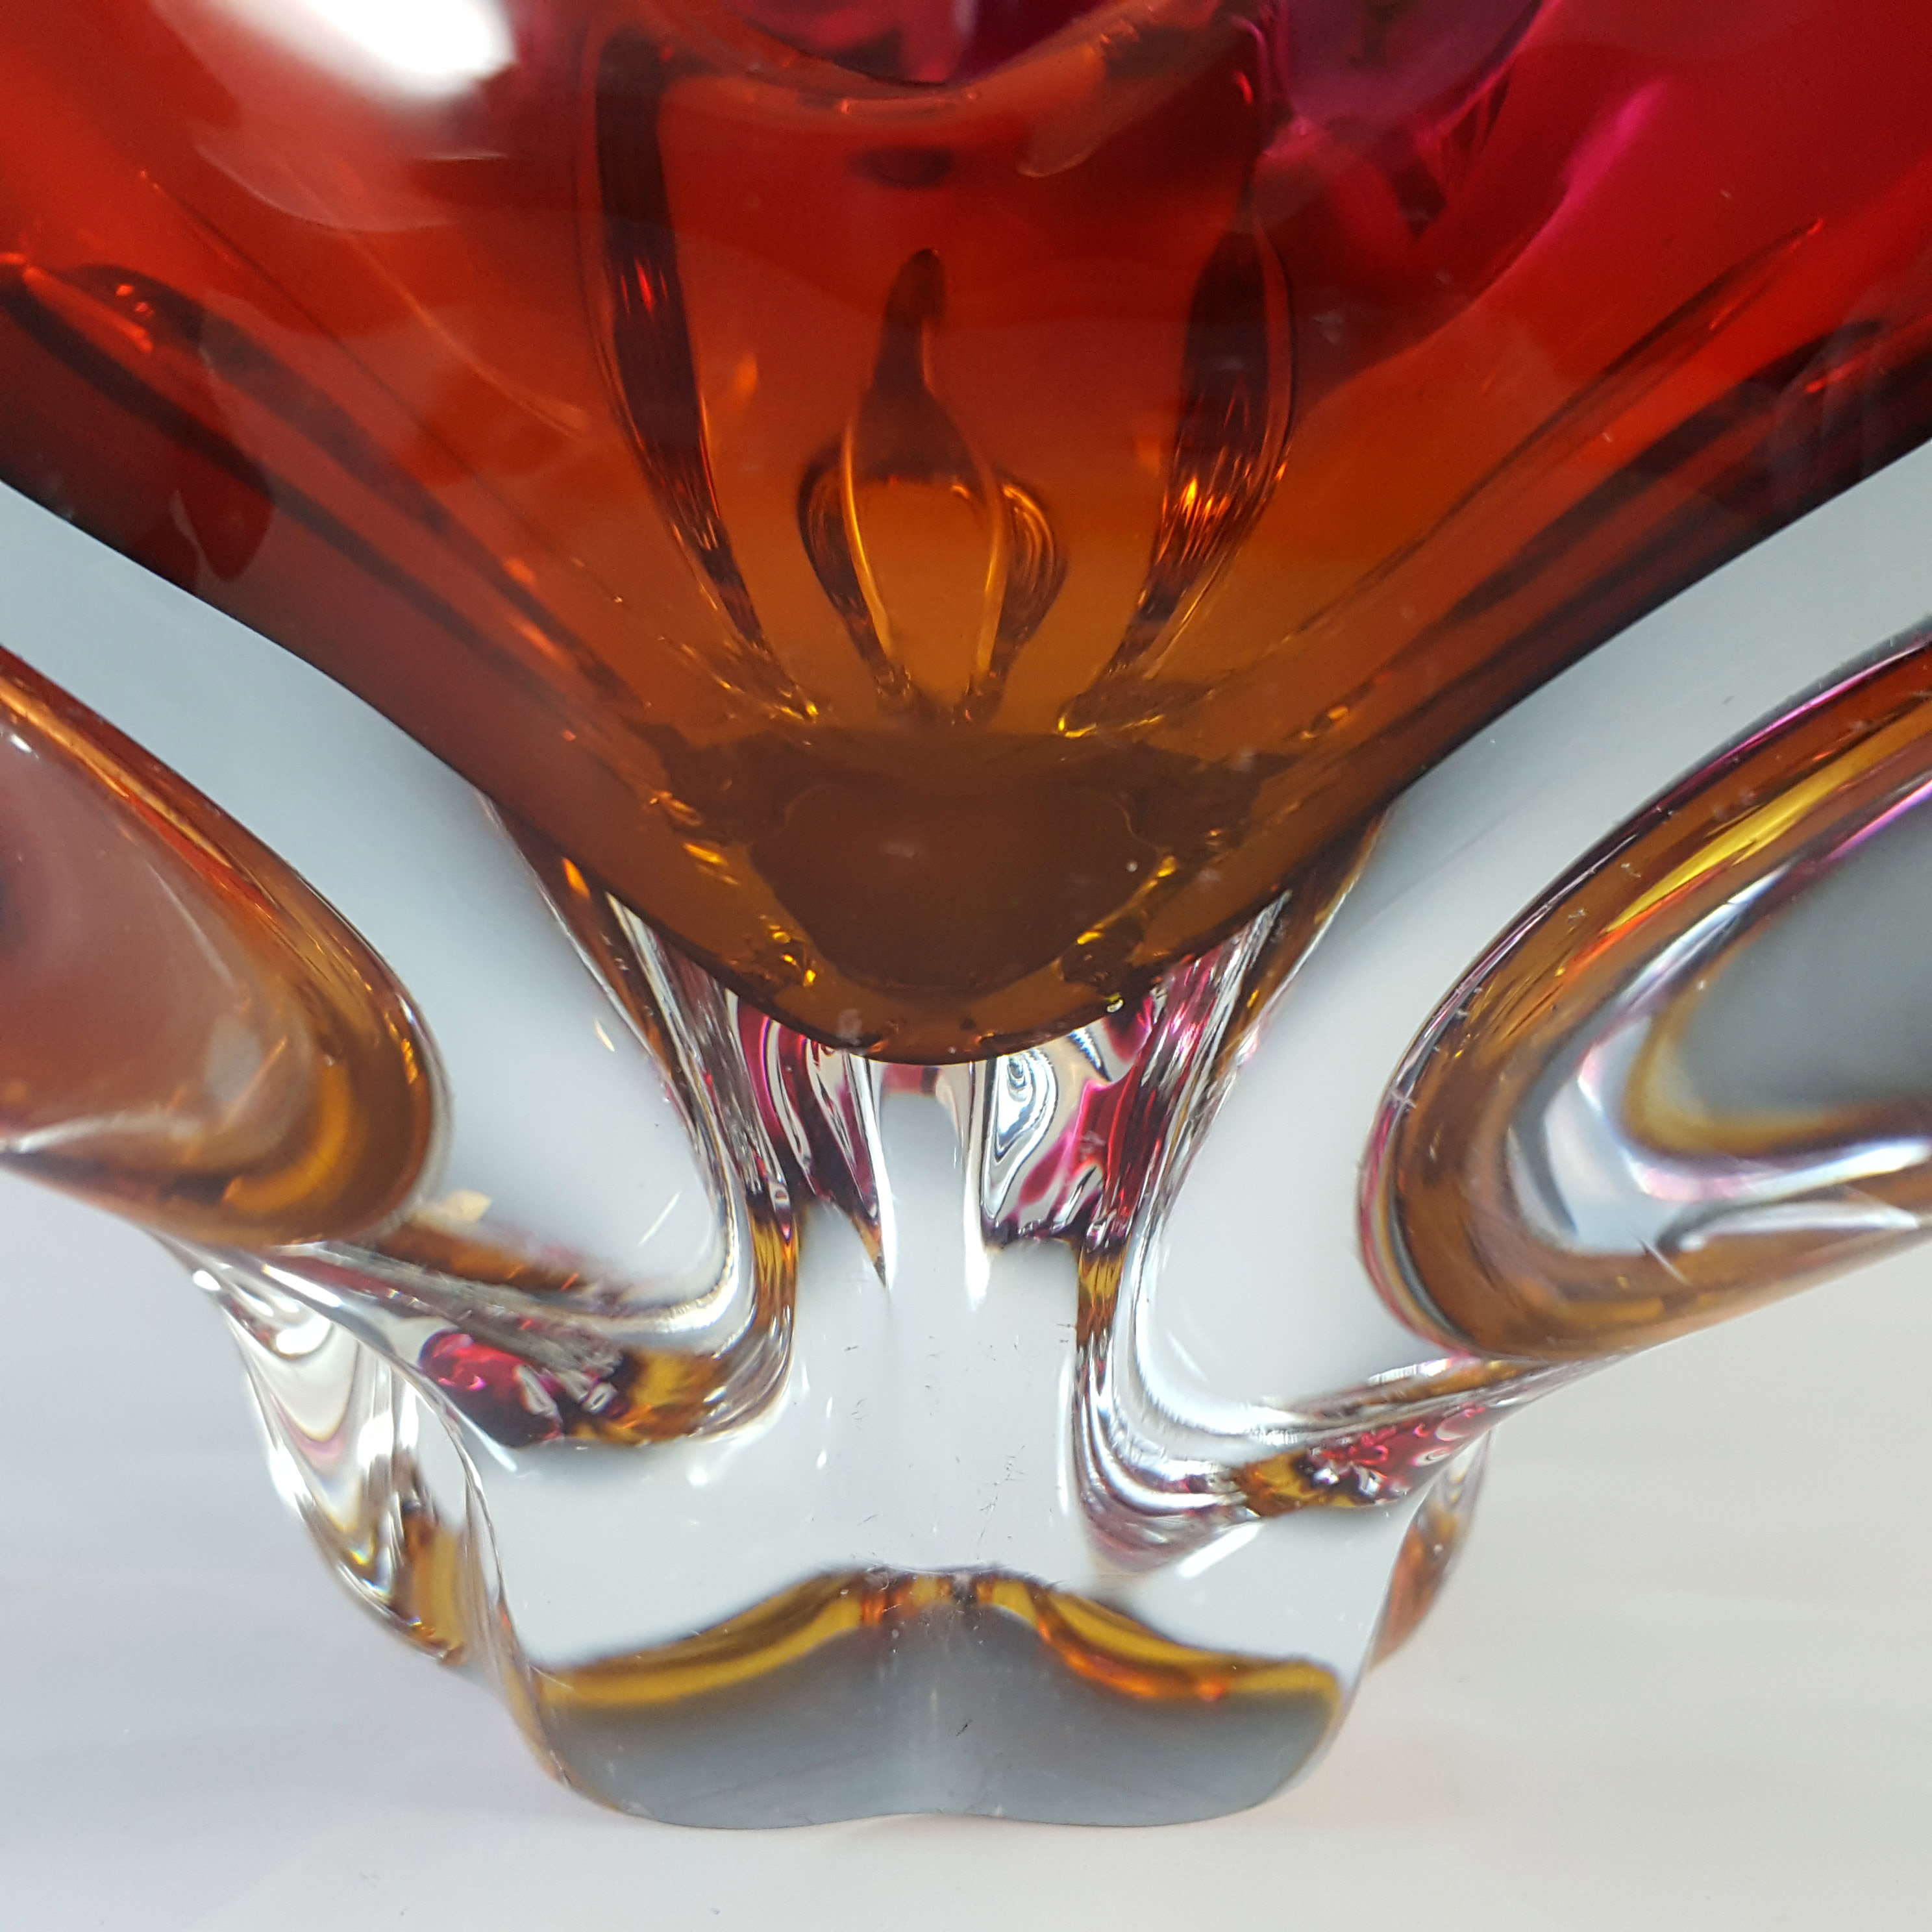 Chřibská #127/5/14 Czech Red & Orange Glass Ashtray Bowl - Click Image to Close